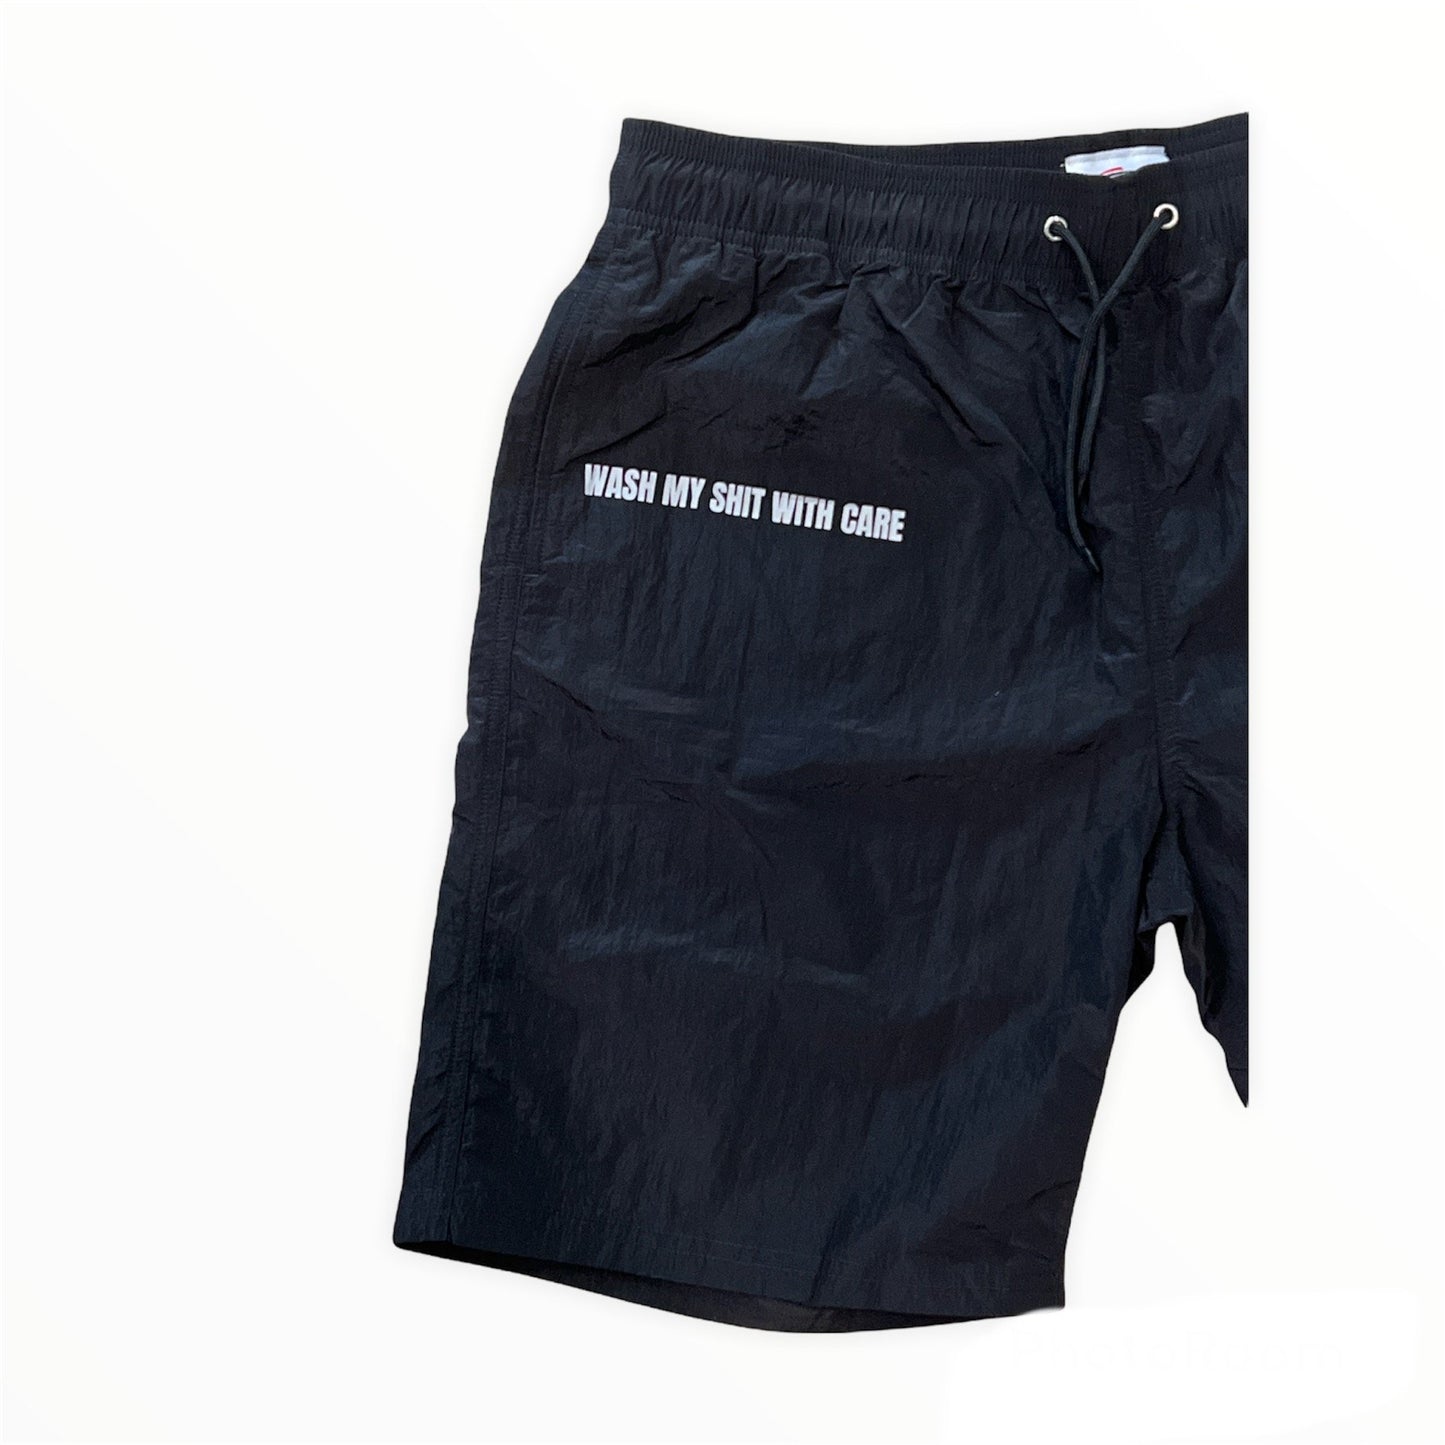 
                  
                    Black Set Sail Base Nylon Shorts - SET SAIL APPAREL
                  
                